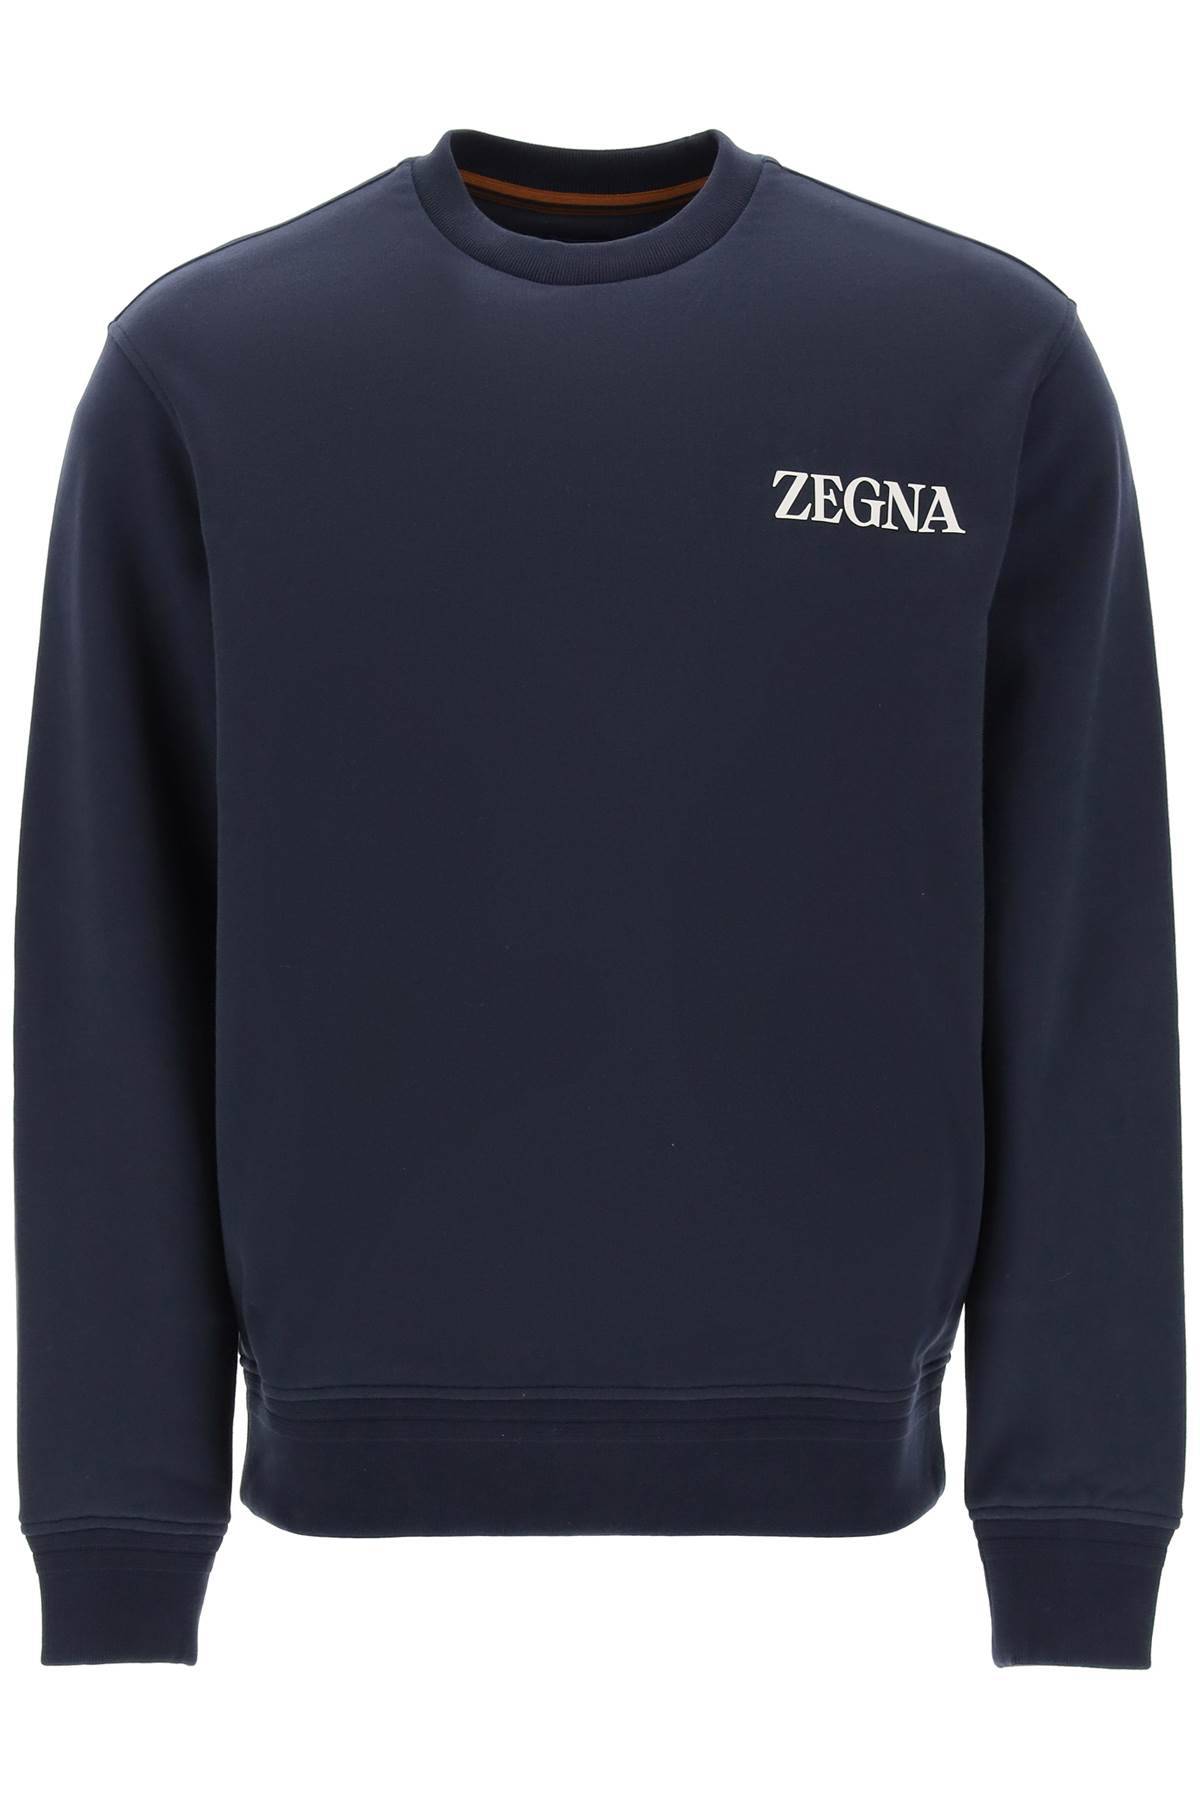 zegna ZEGNA crewneck sweatshirt with rubberized logo